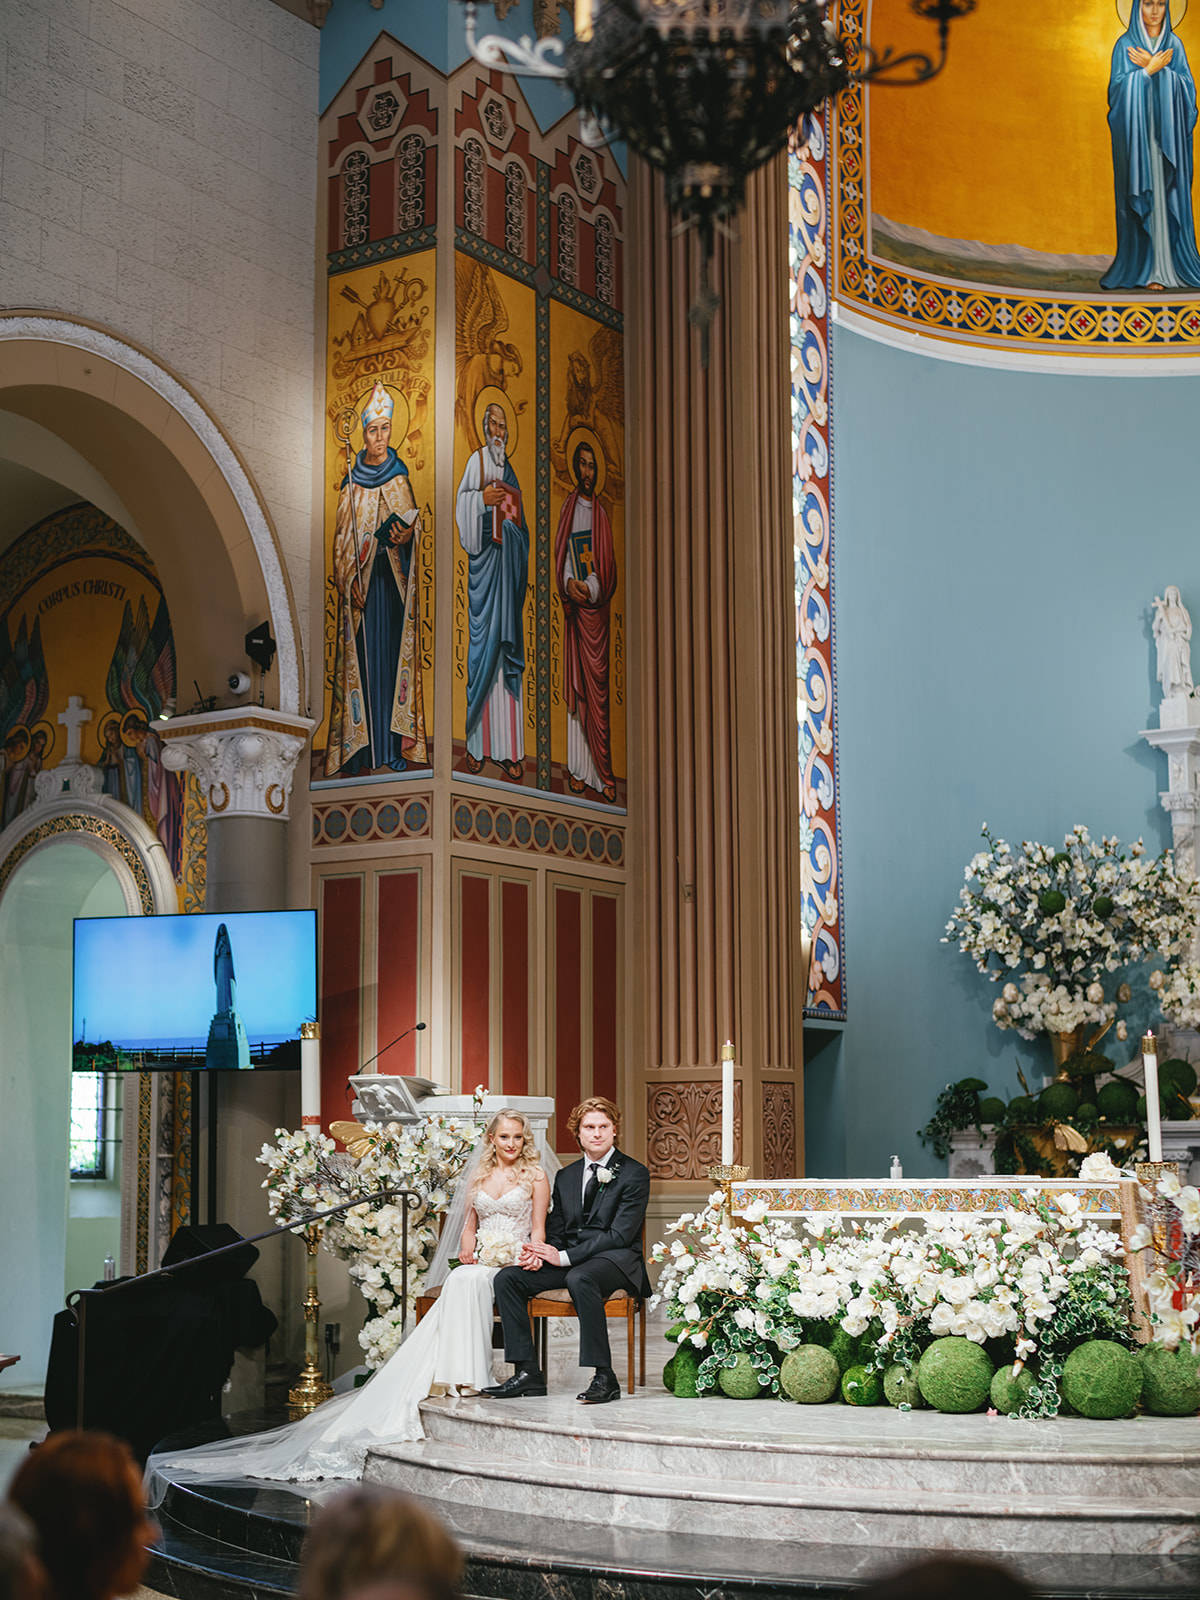 Catholic Wedding Ceremony at St. Monica Catholic Church in Santa Monica, California.